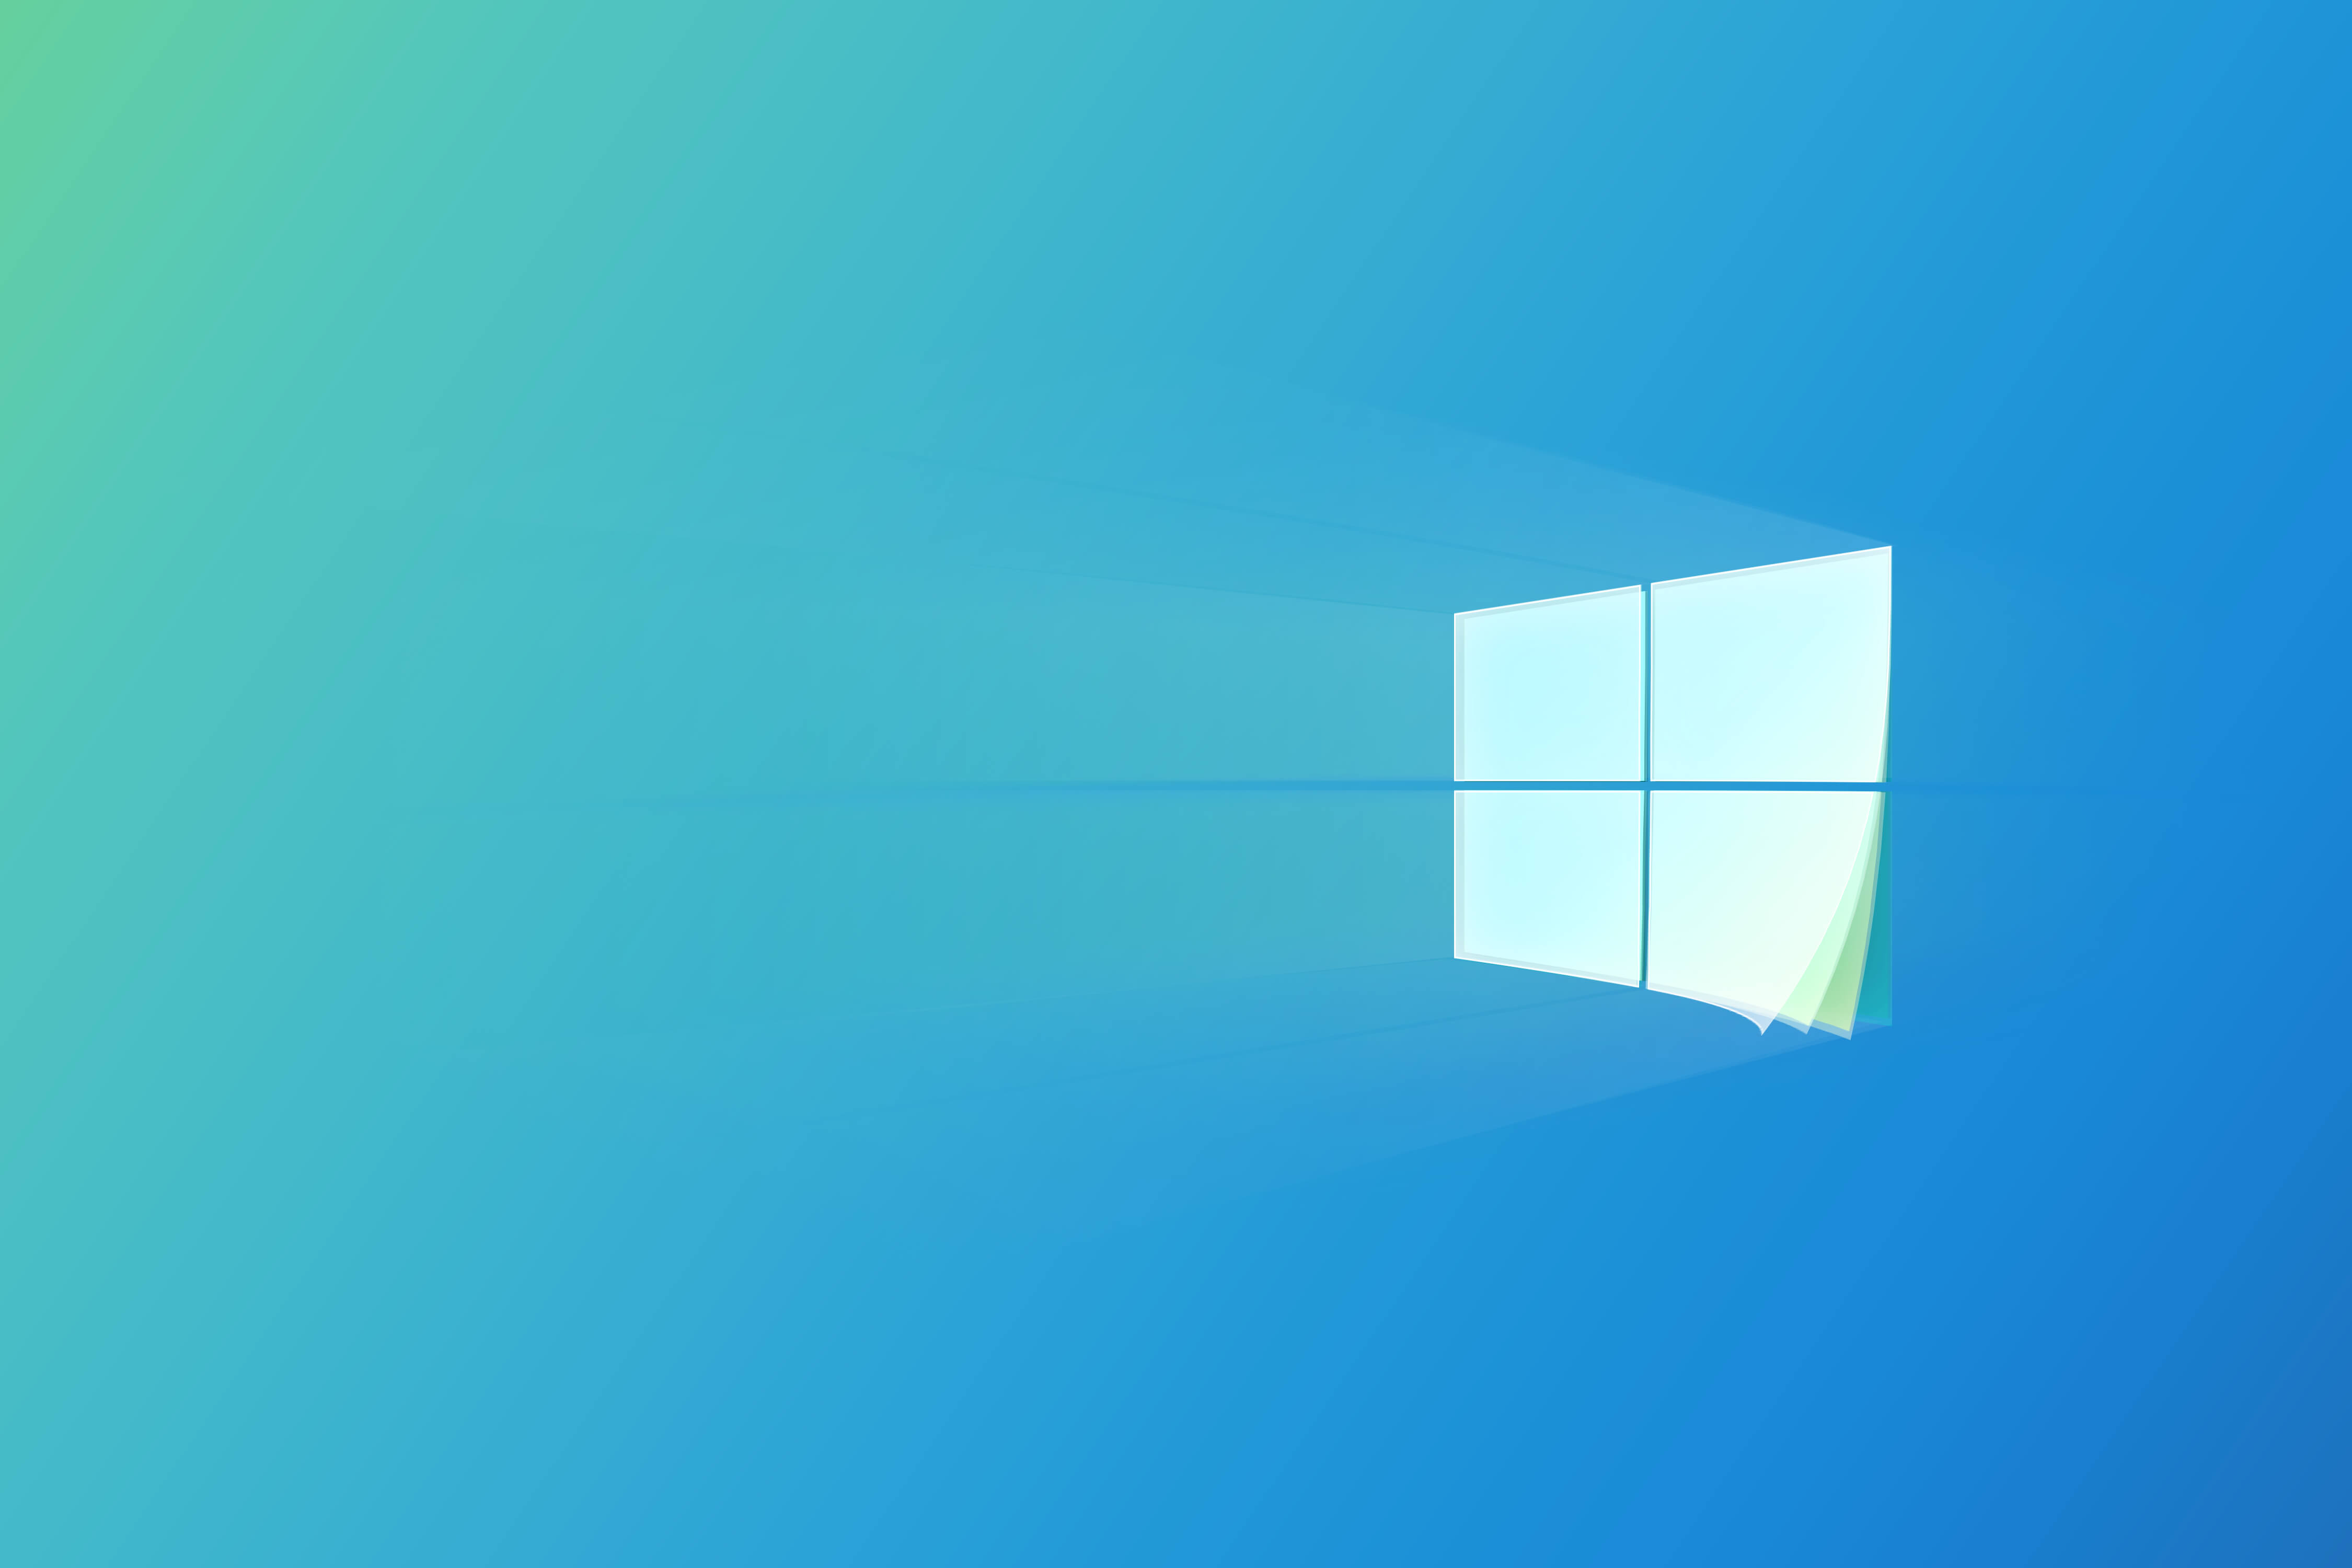 Windows 10 & Edge & Fluent by Genrole Caspe